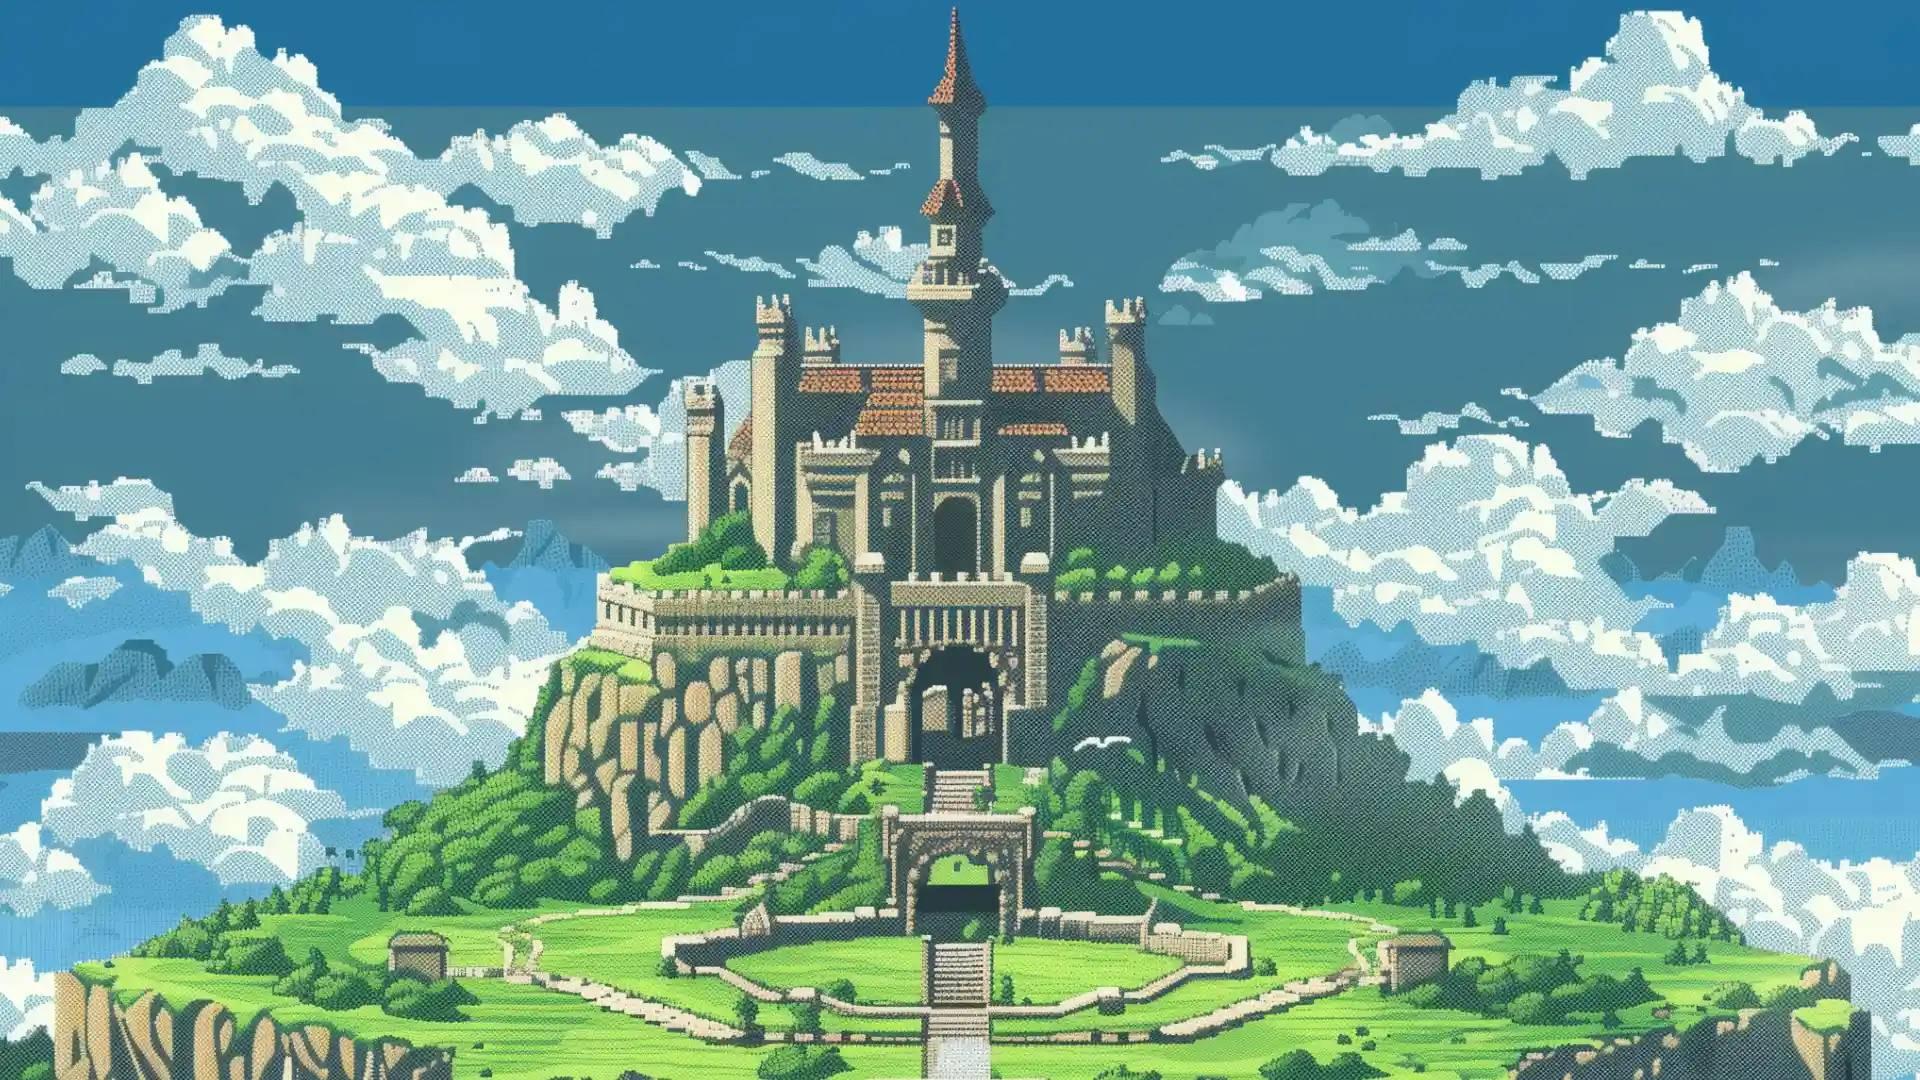 Zelda world